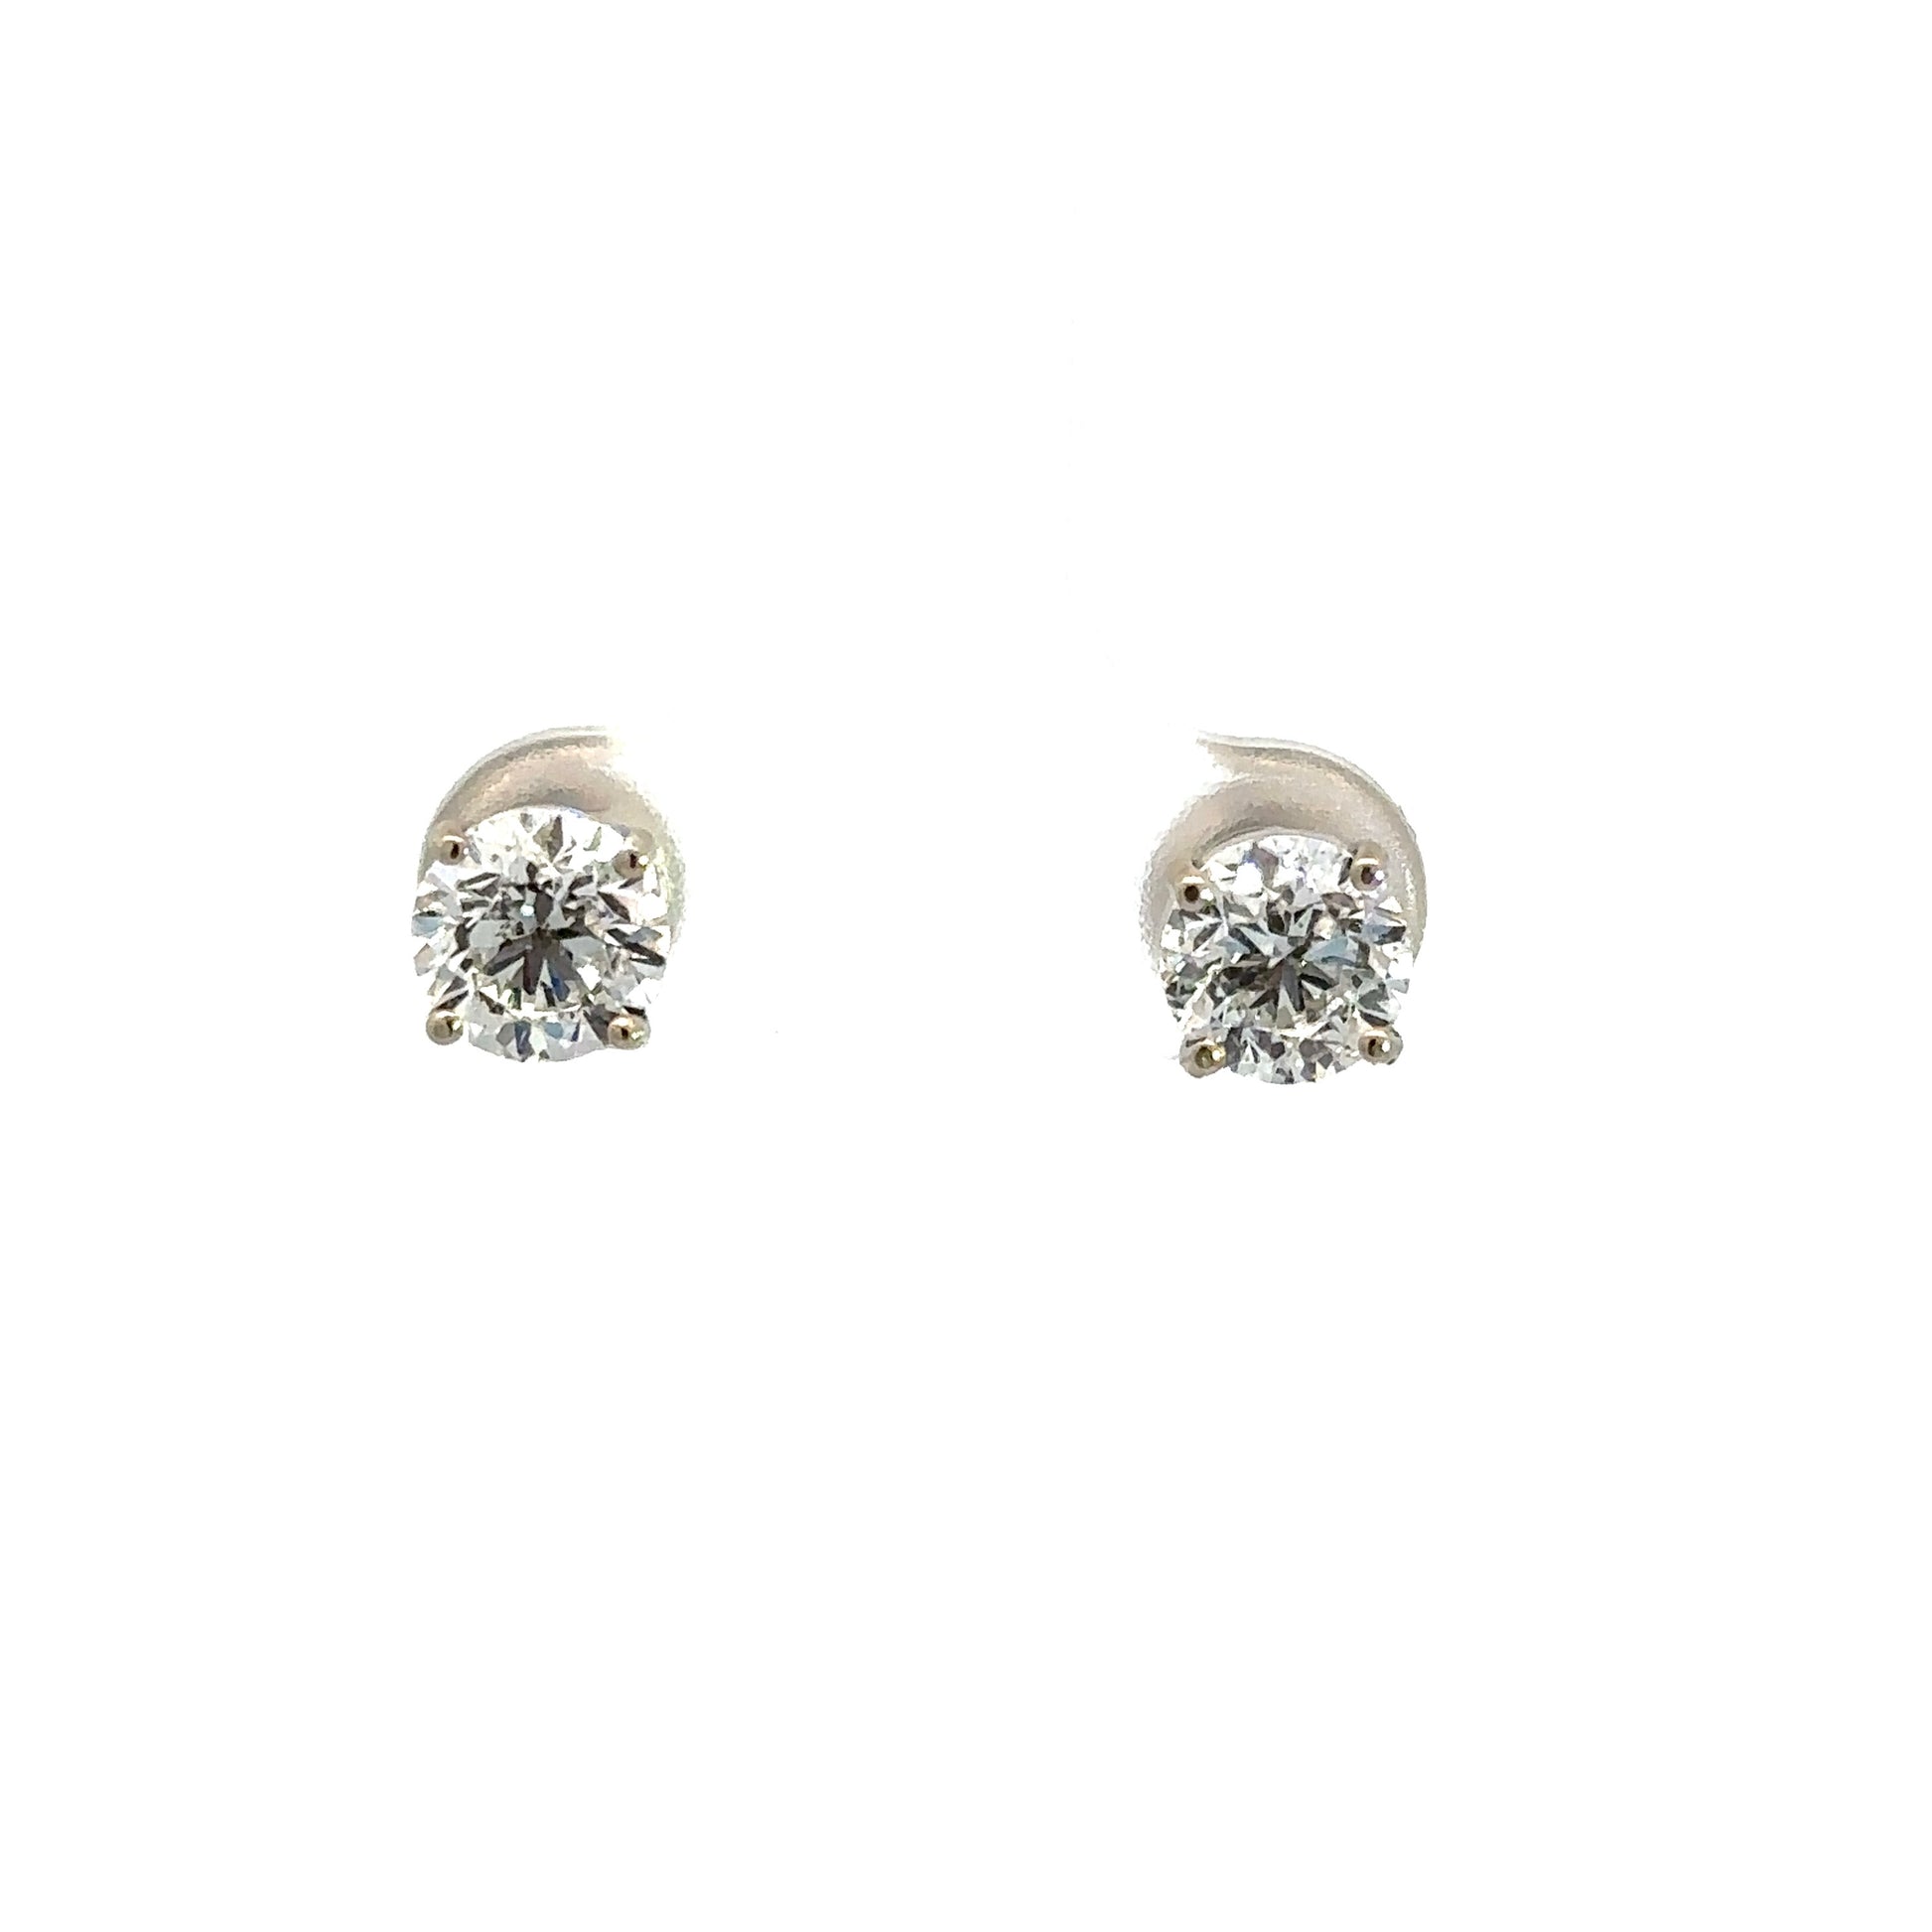 1 Carat Round diamond stud earrings without diamond drops